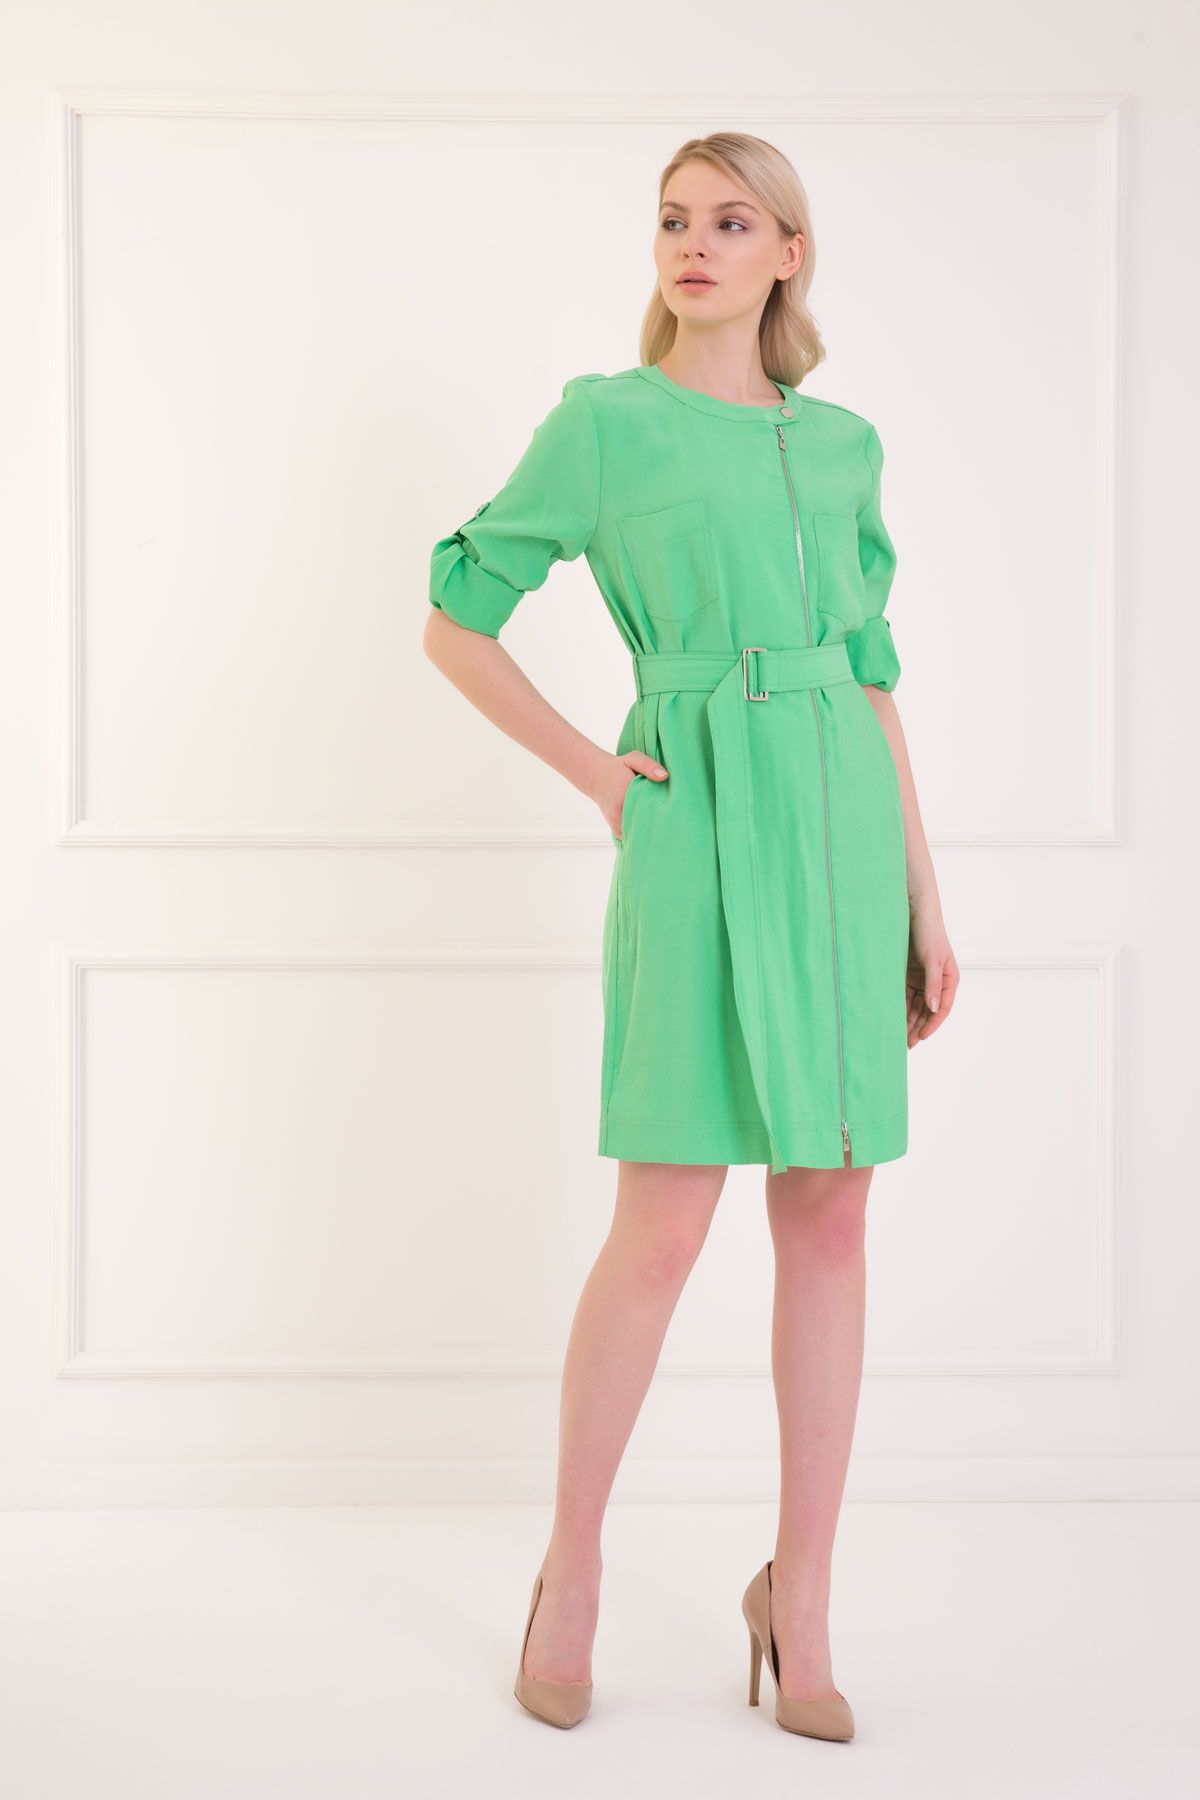 KIWE - Zipper Detailed Two Pocket Belted Green Dress